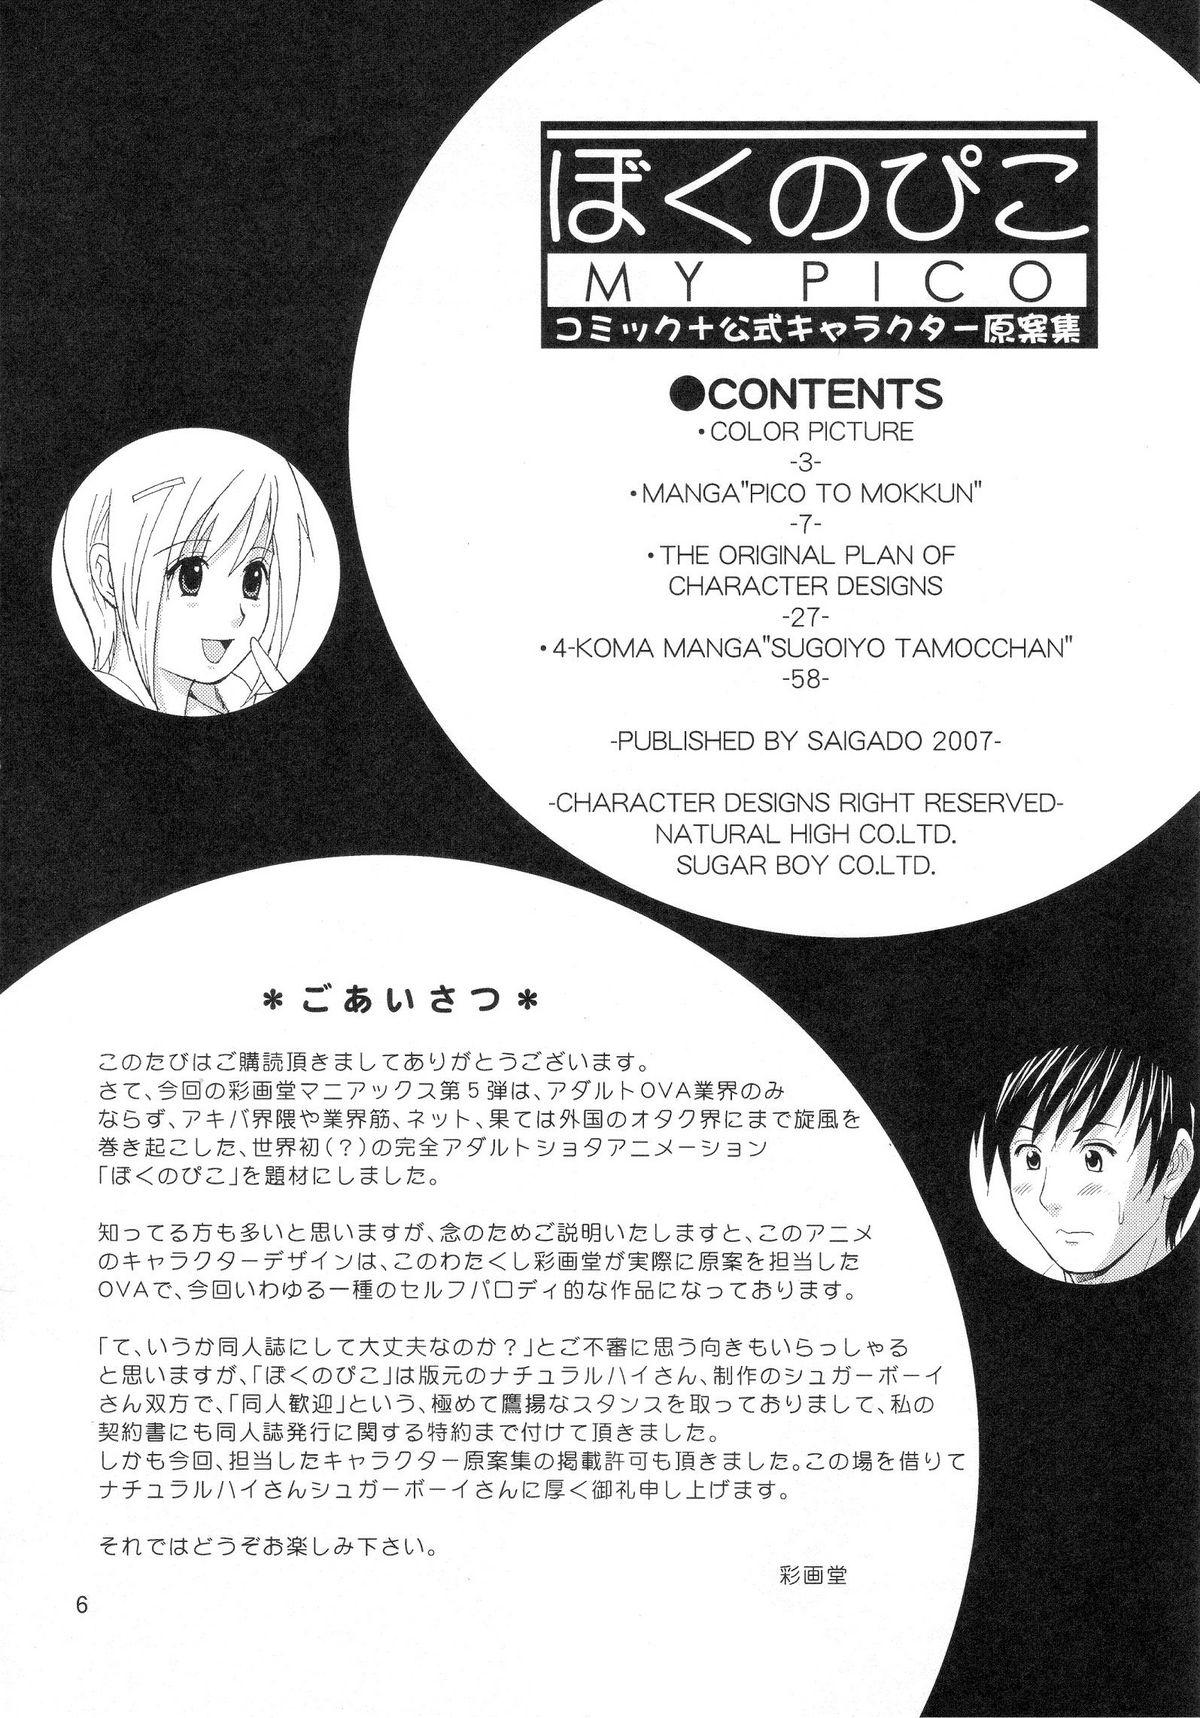 Boku no Pico Comic + Koushiki Character Genanshuu 3